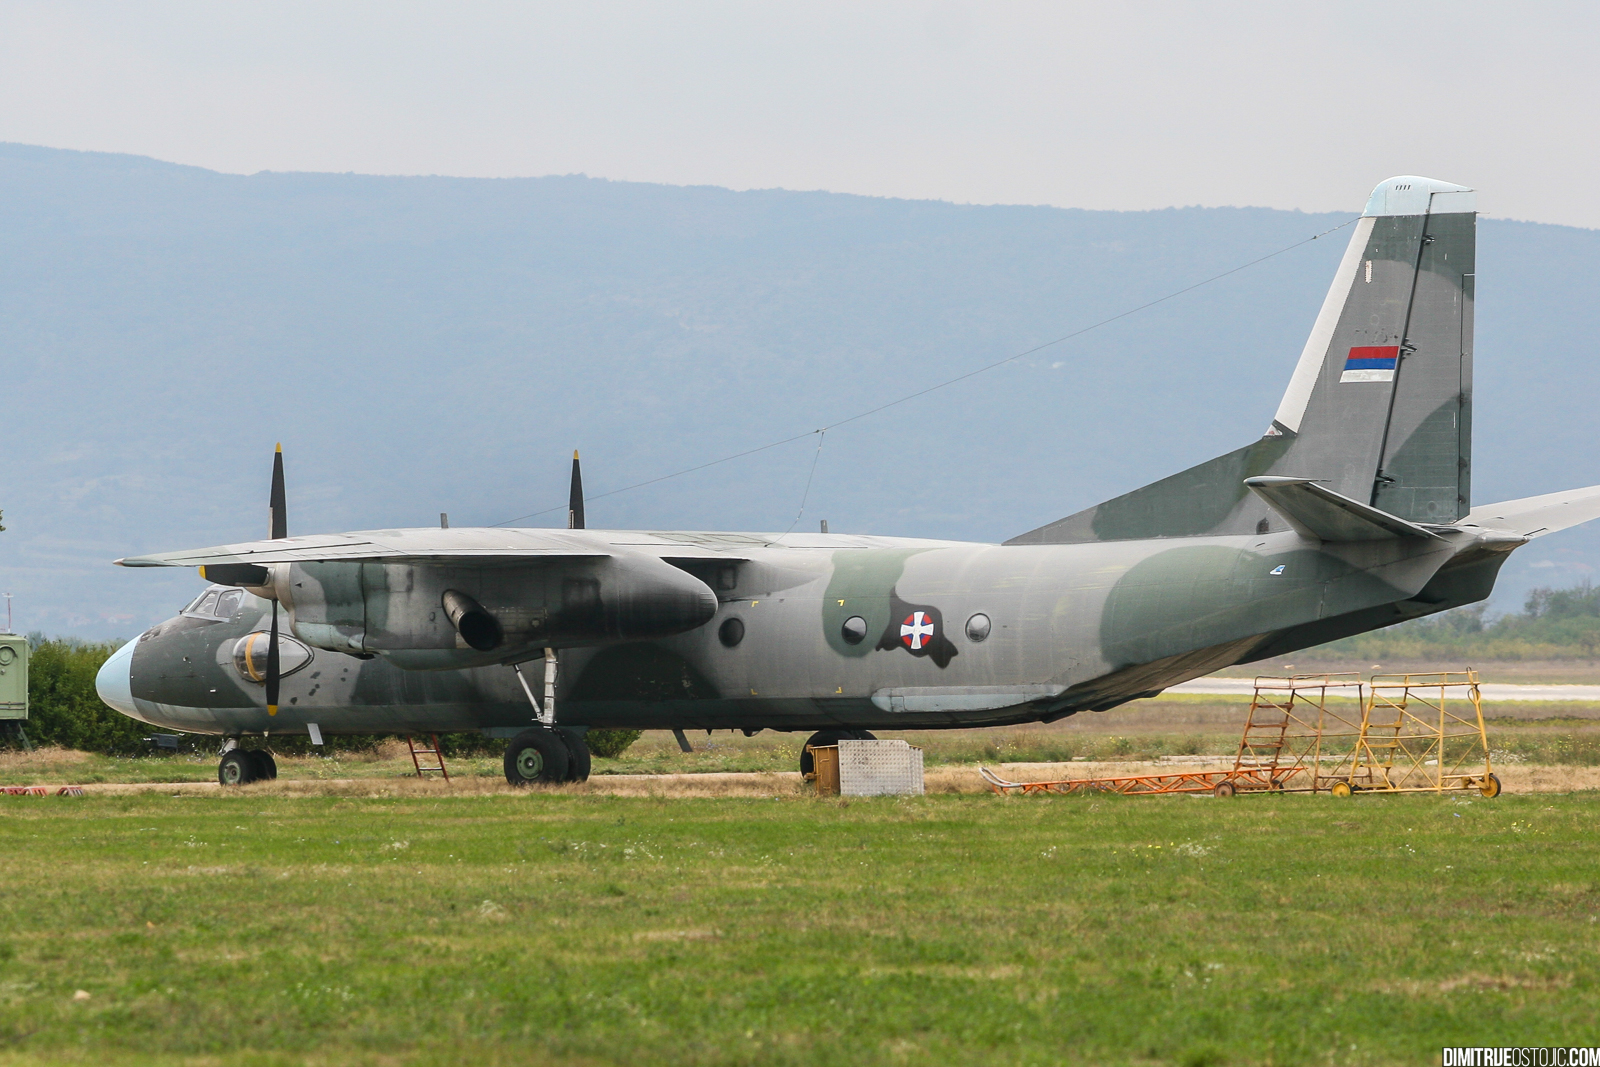 AN-26 Serbian Air Force 138.tae "RODE" © dimitrijeostojic.com